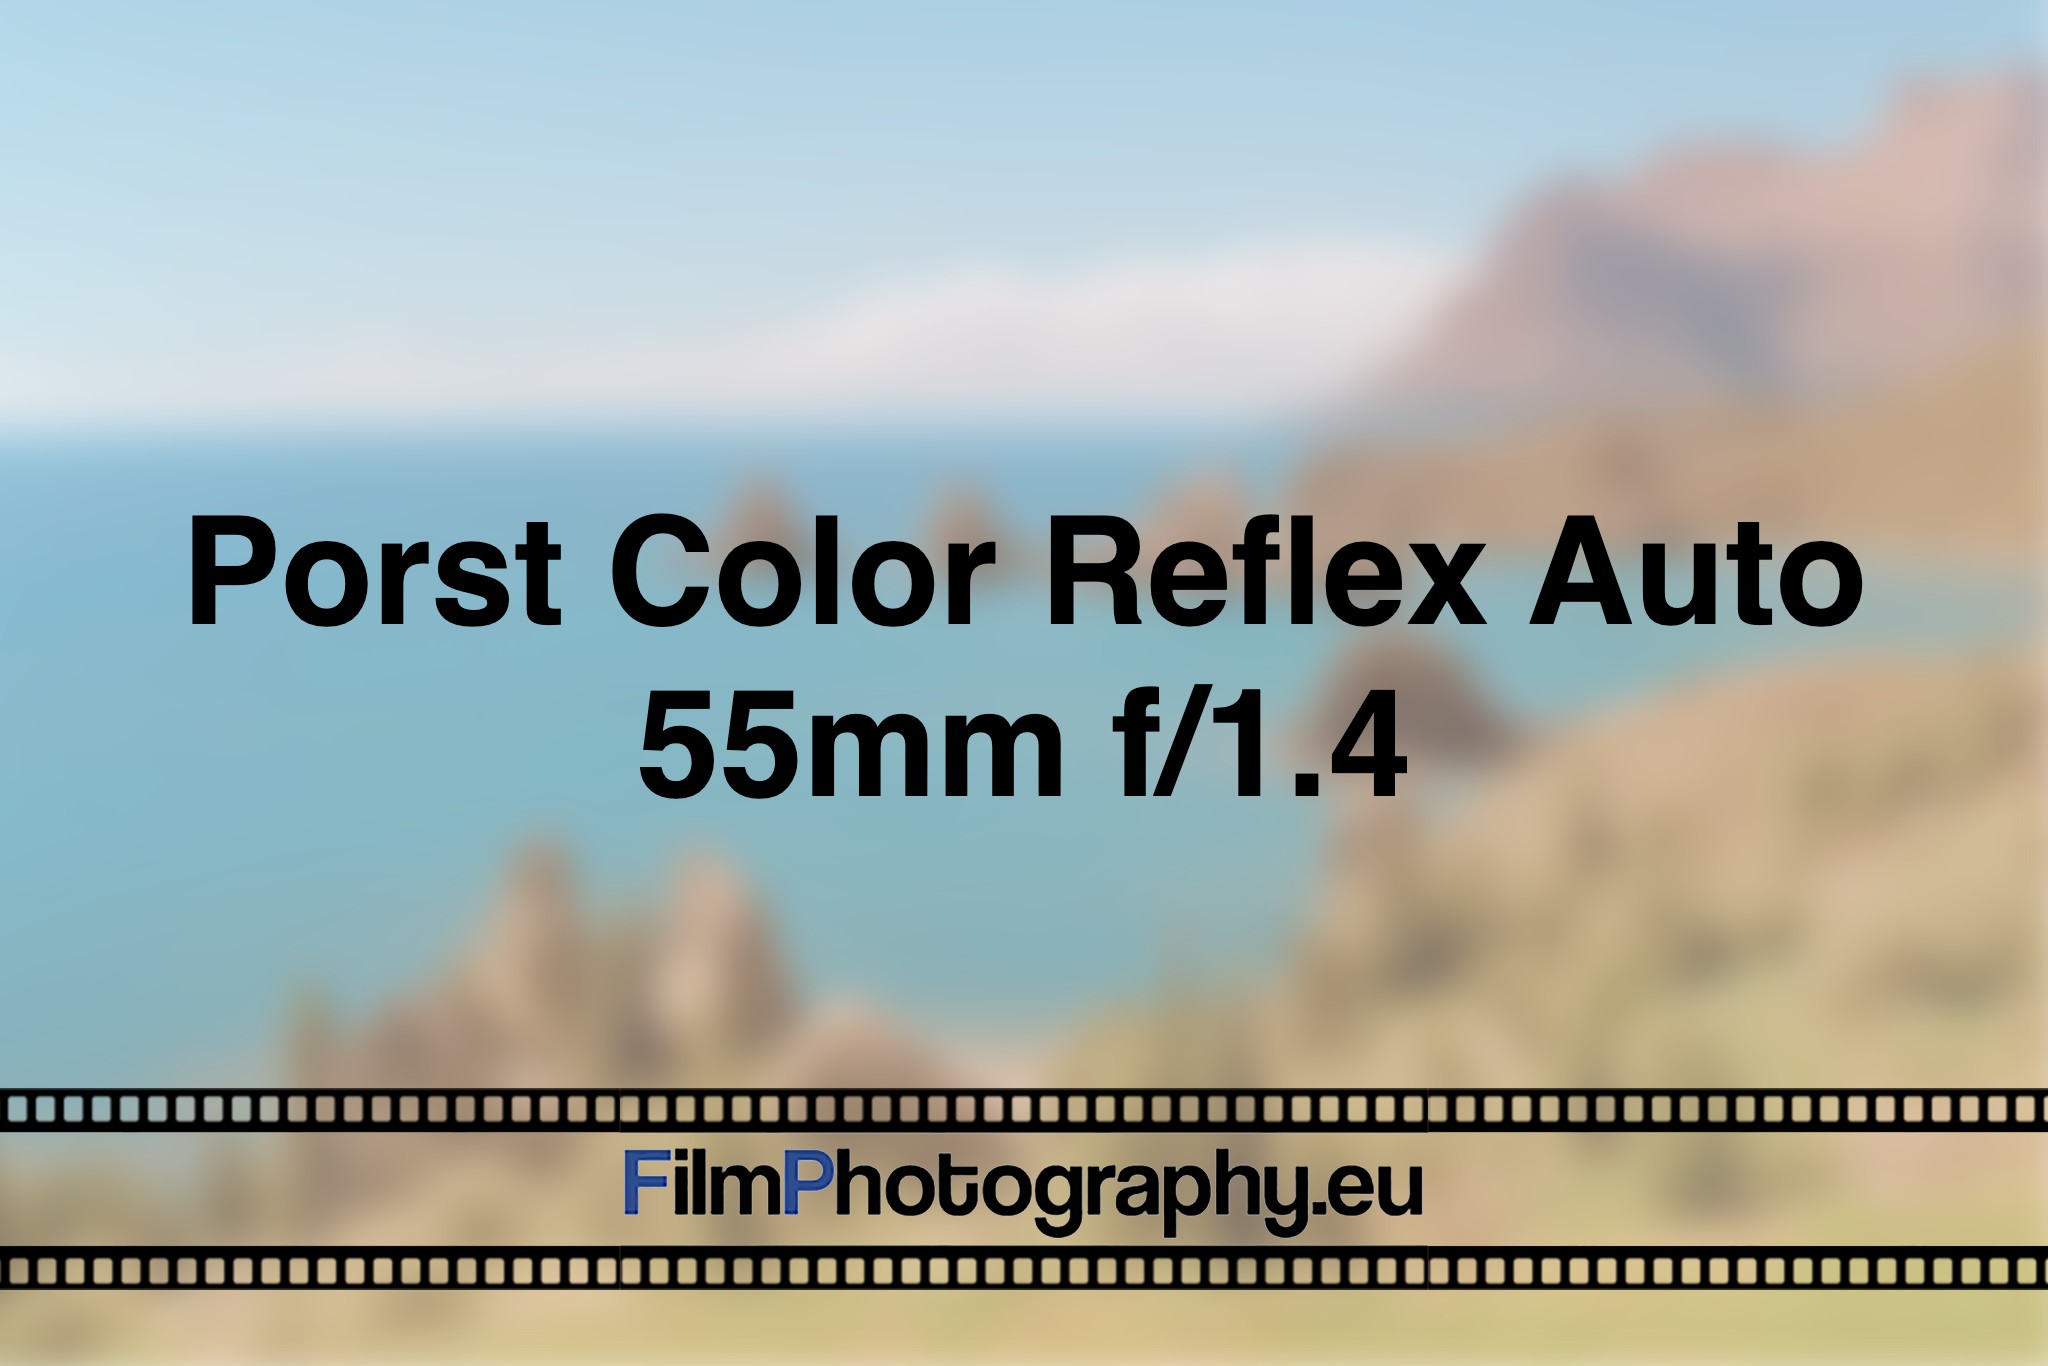 porst-color-reflex-auto-55mm-f-1-4-photo-bnv